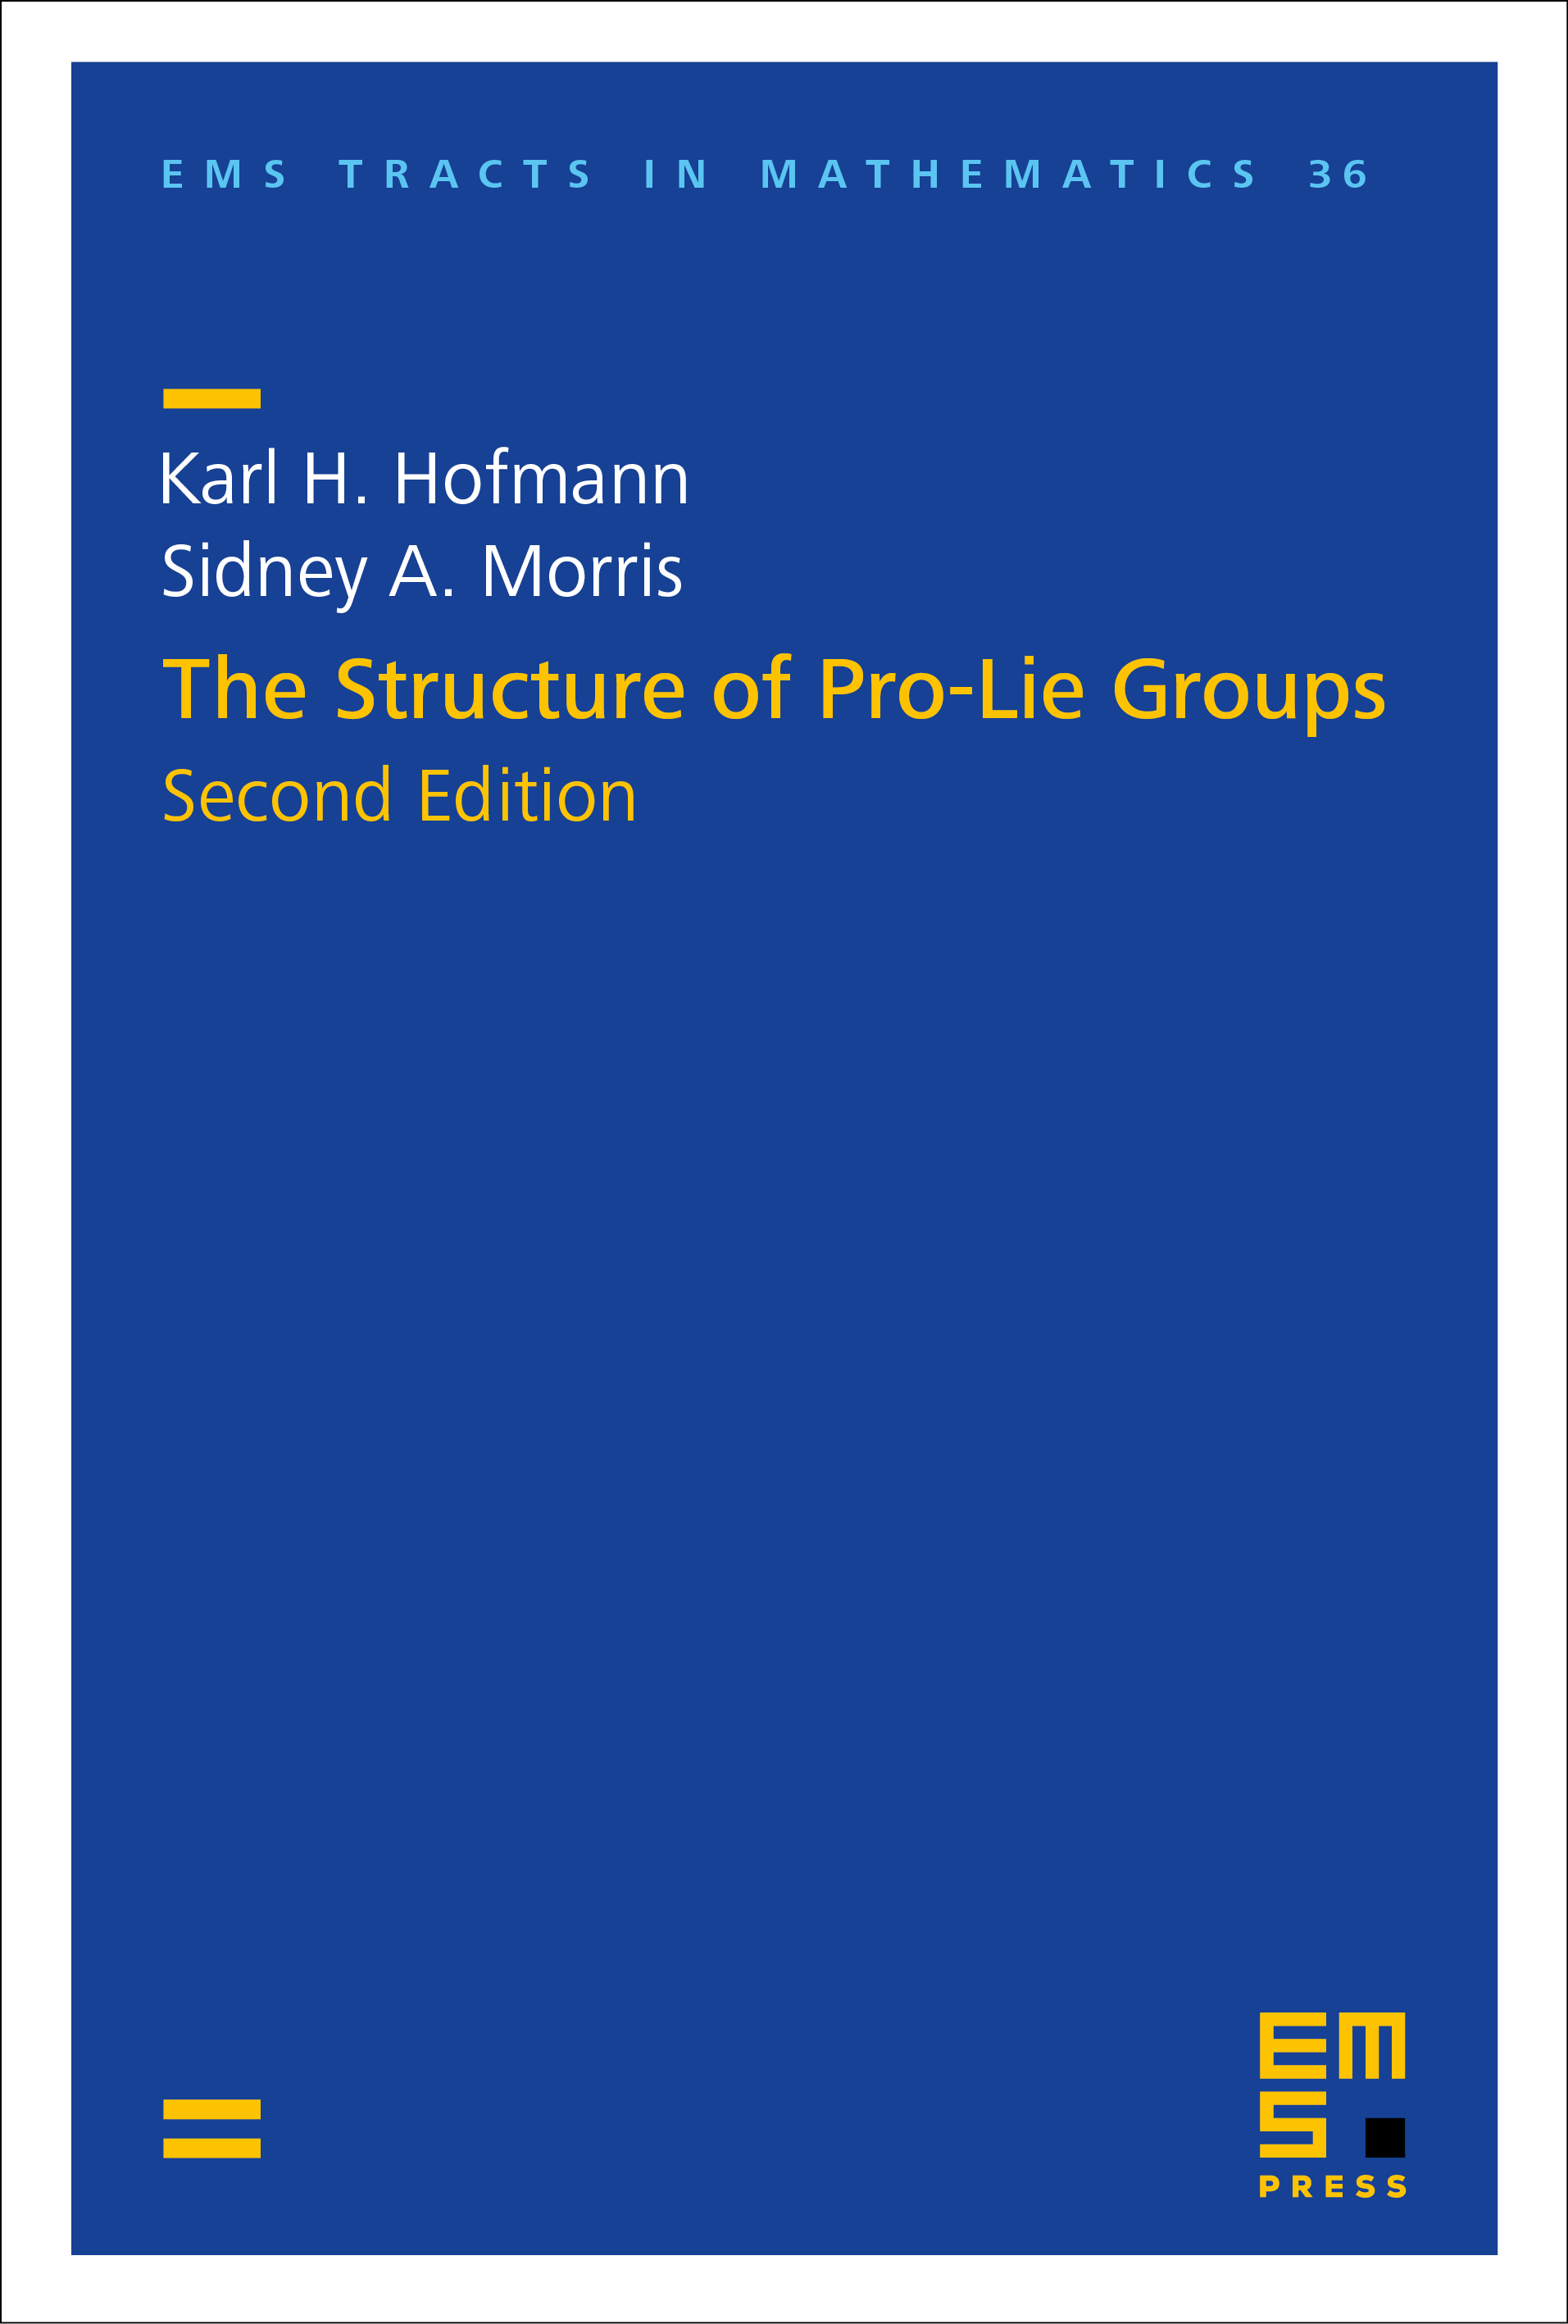 Abelian Pro-Lie Groups cover